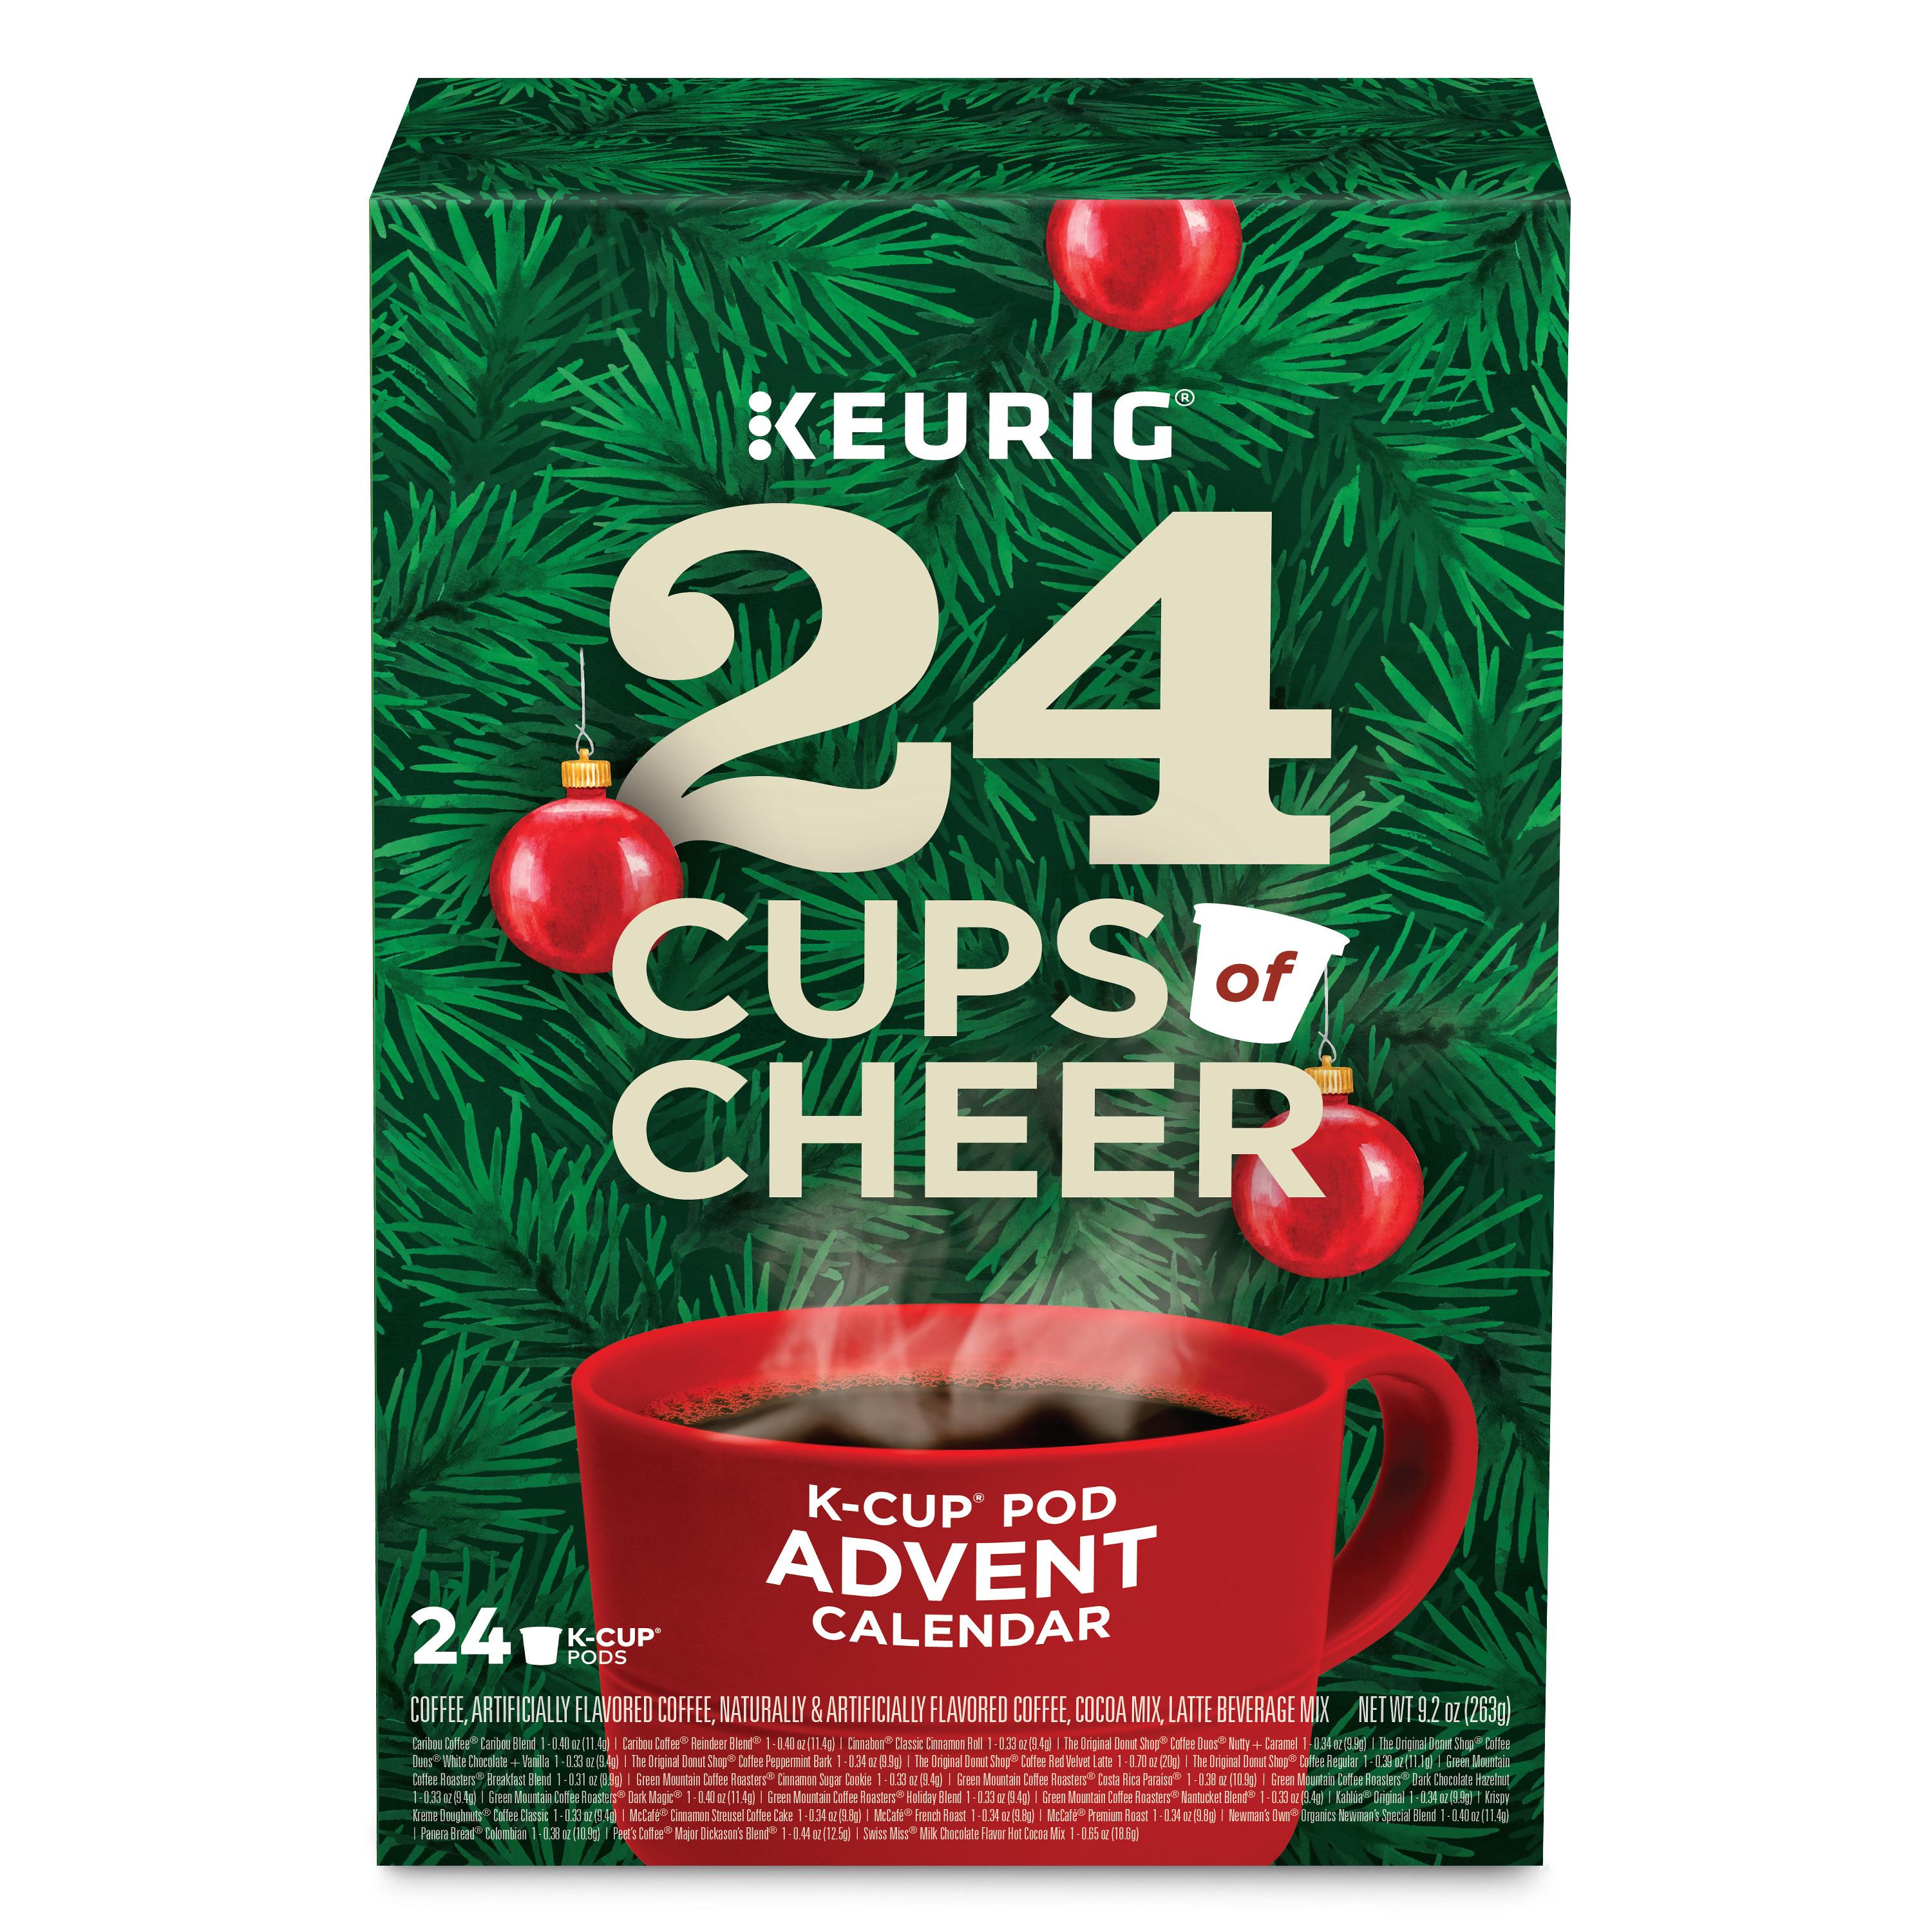 Keurig 24 K-Cup Pod Advent Calendar for $9.37